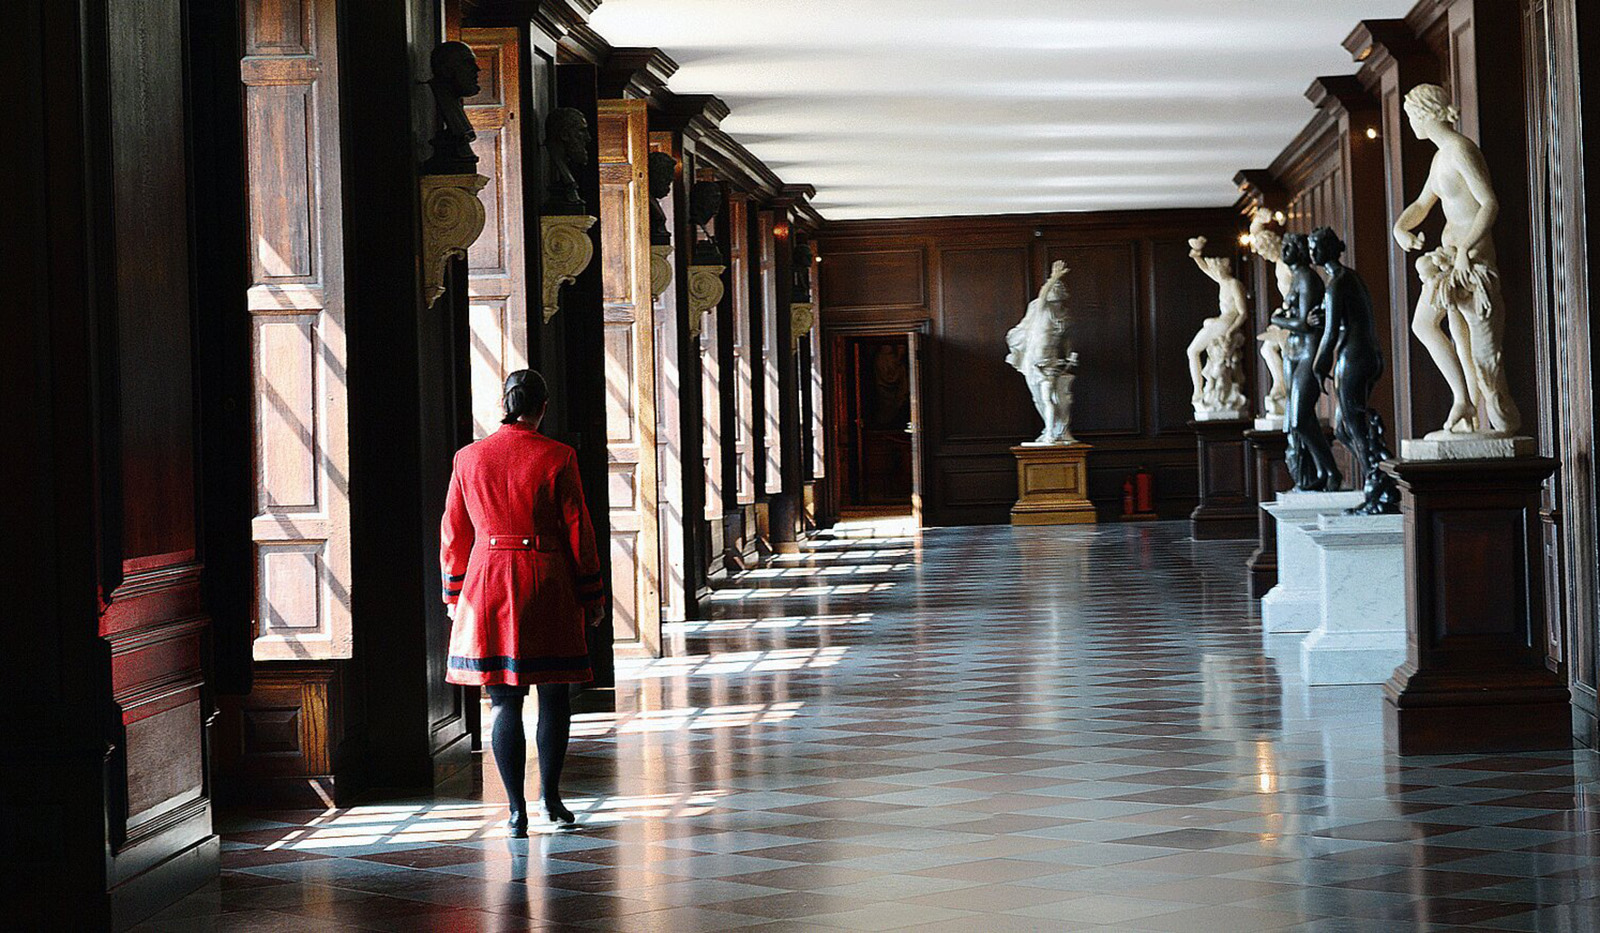 photo of hallway in hampton court palace orangery